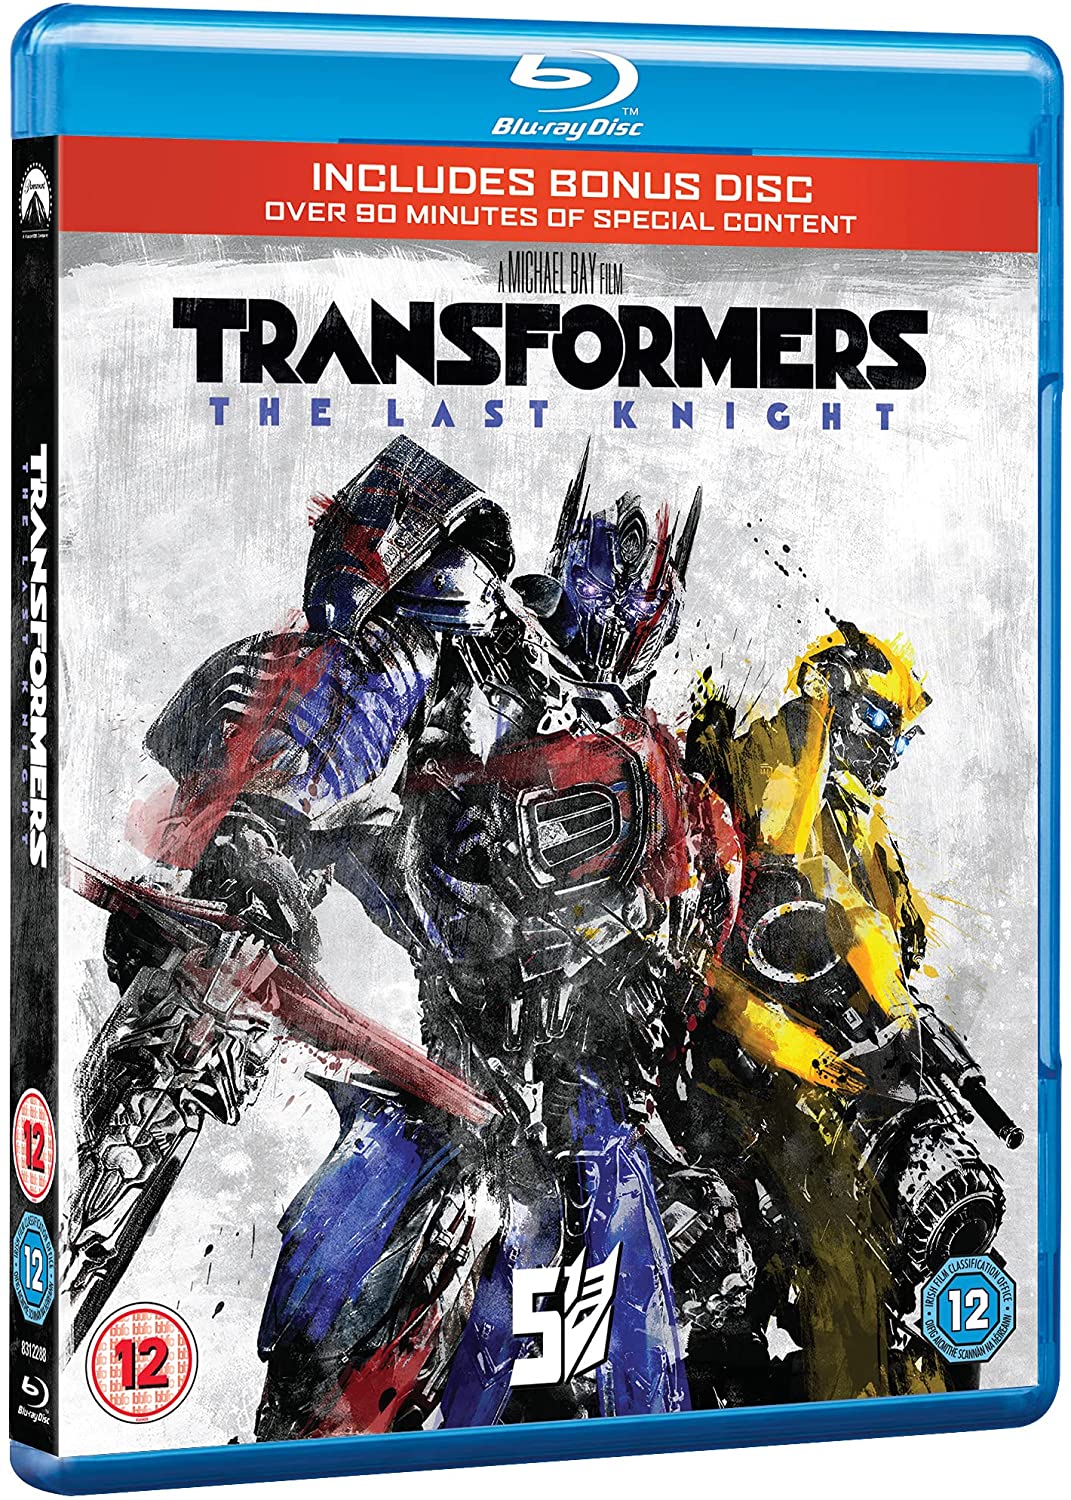 Transformers: The Last Knight (BD+ Bonusdisc BD) [Blu-ray] [2017] [Region Free]